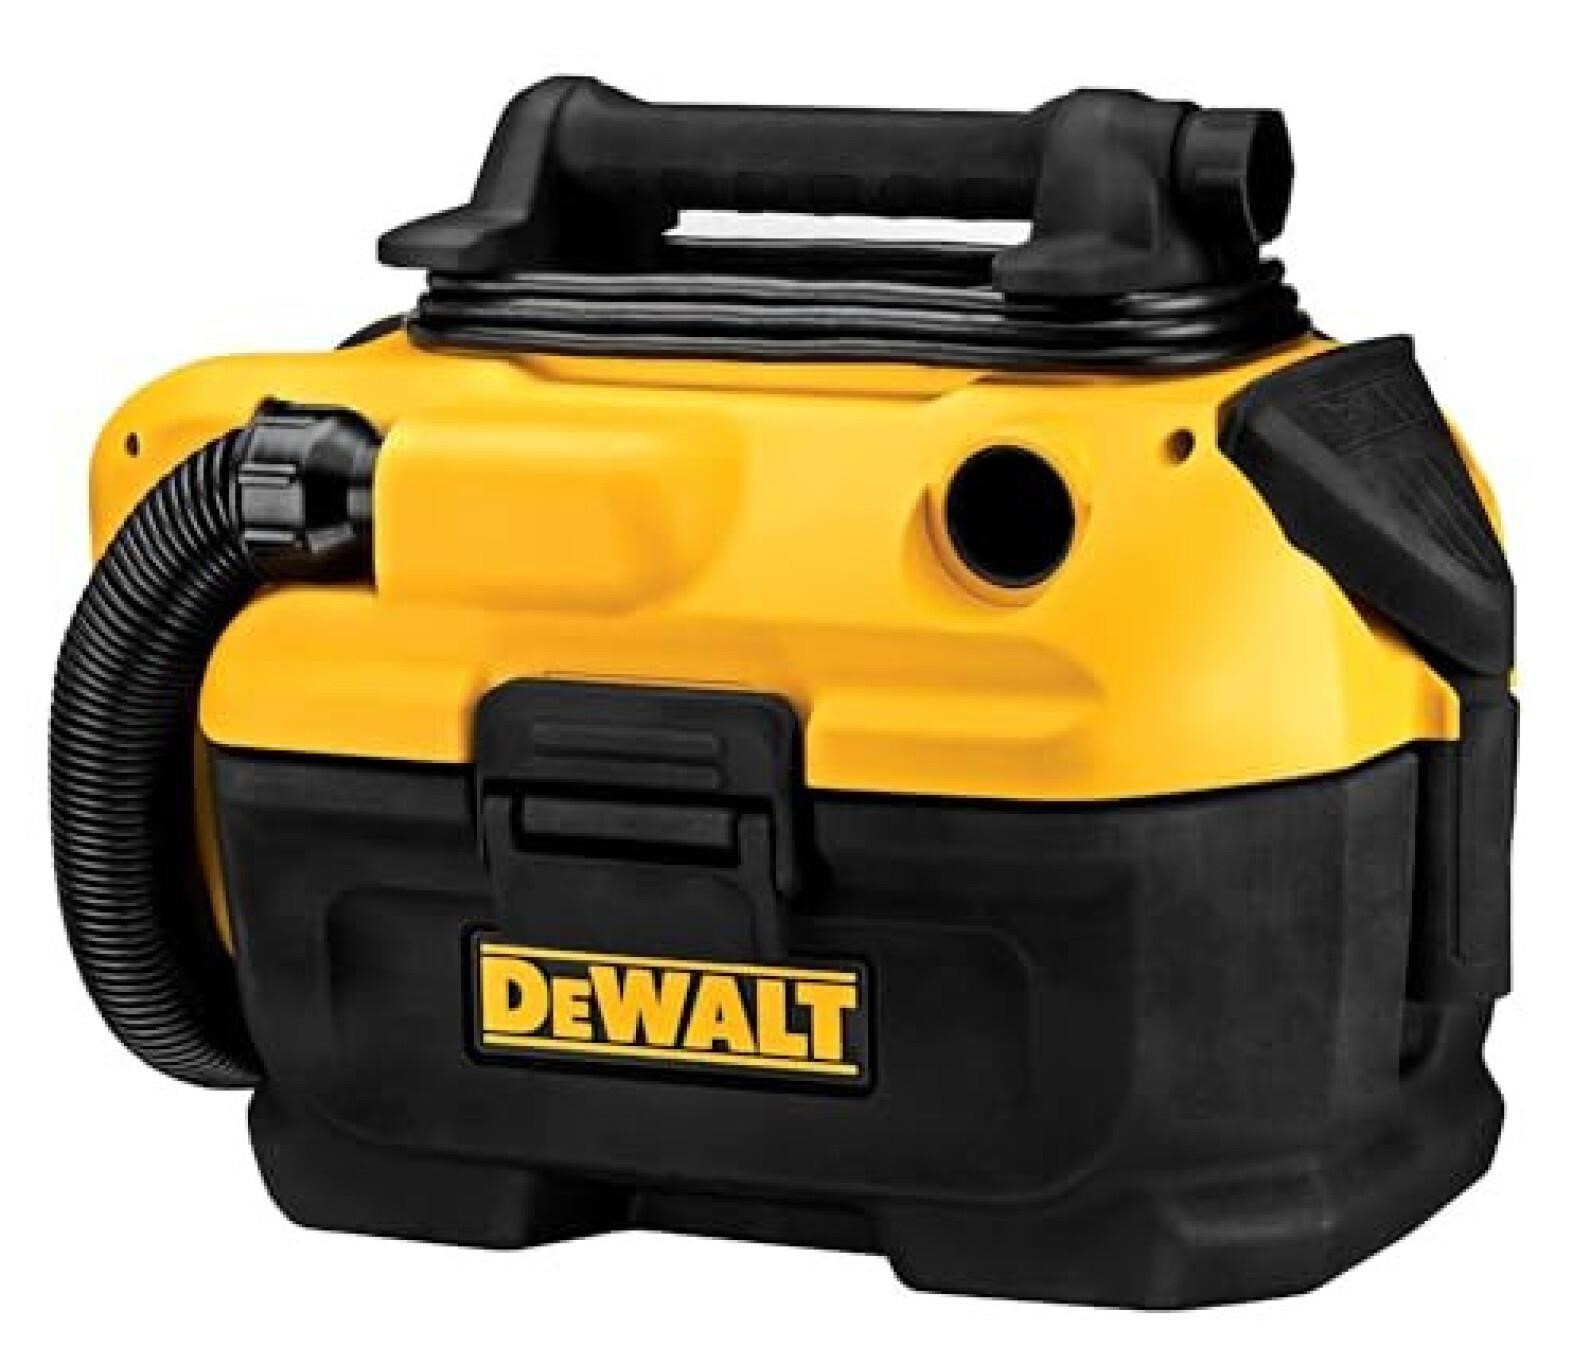 DEWALT 20V MAX Wet/Dry Vacuum, Cordless and Corded